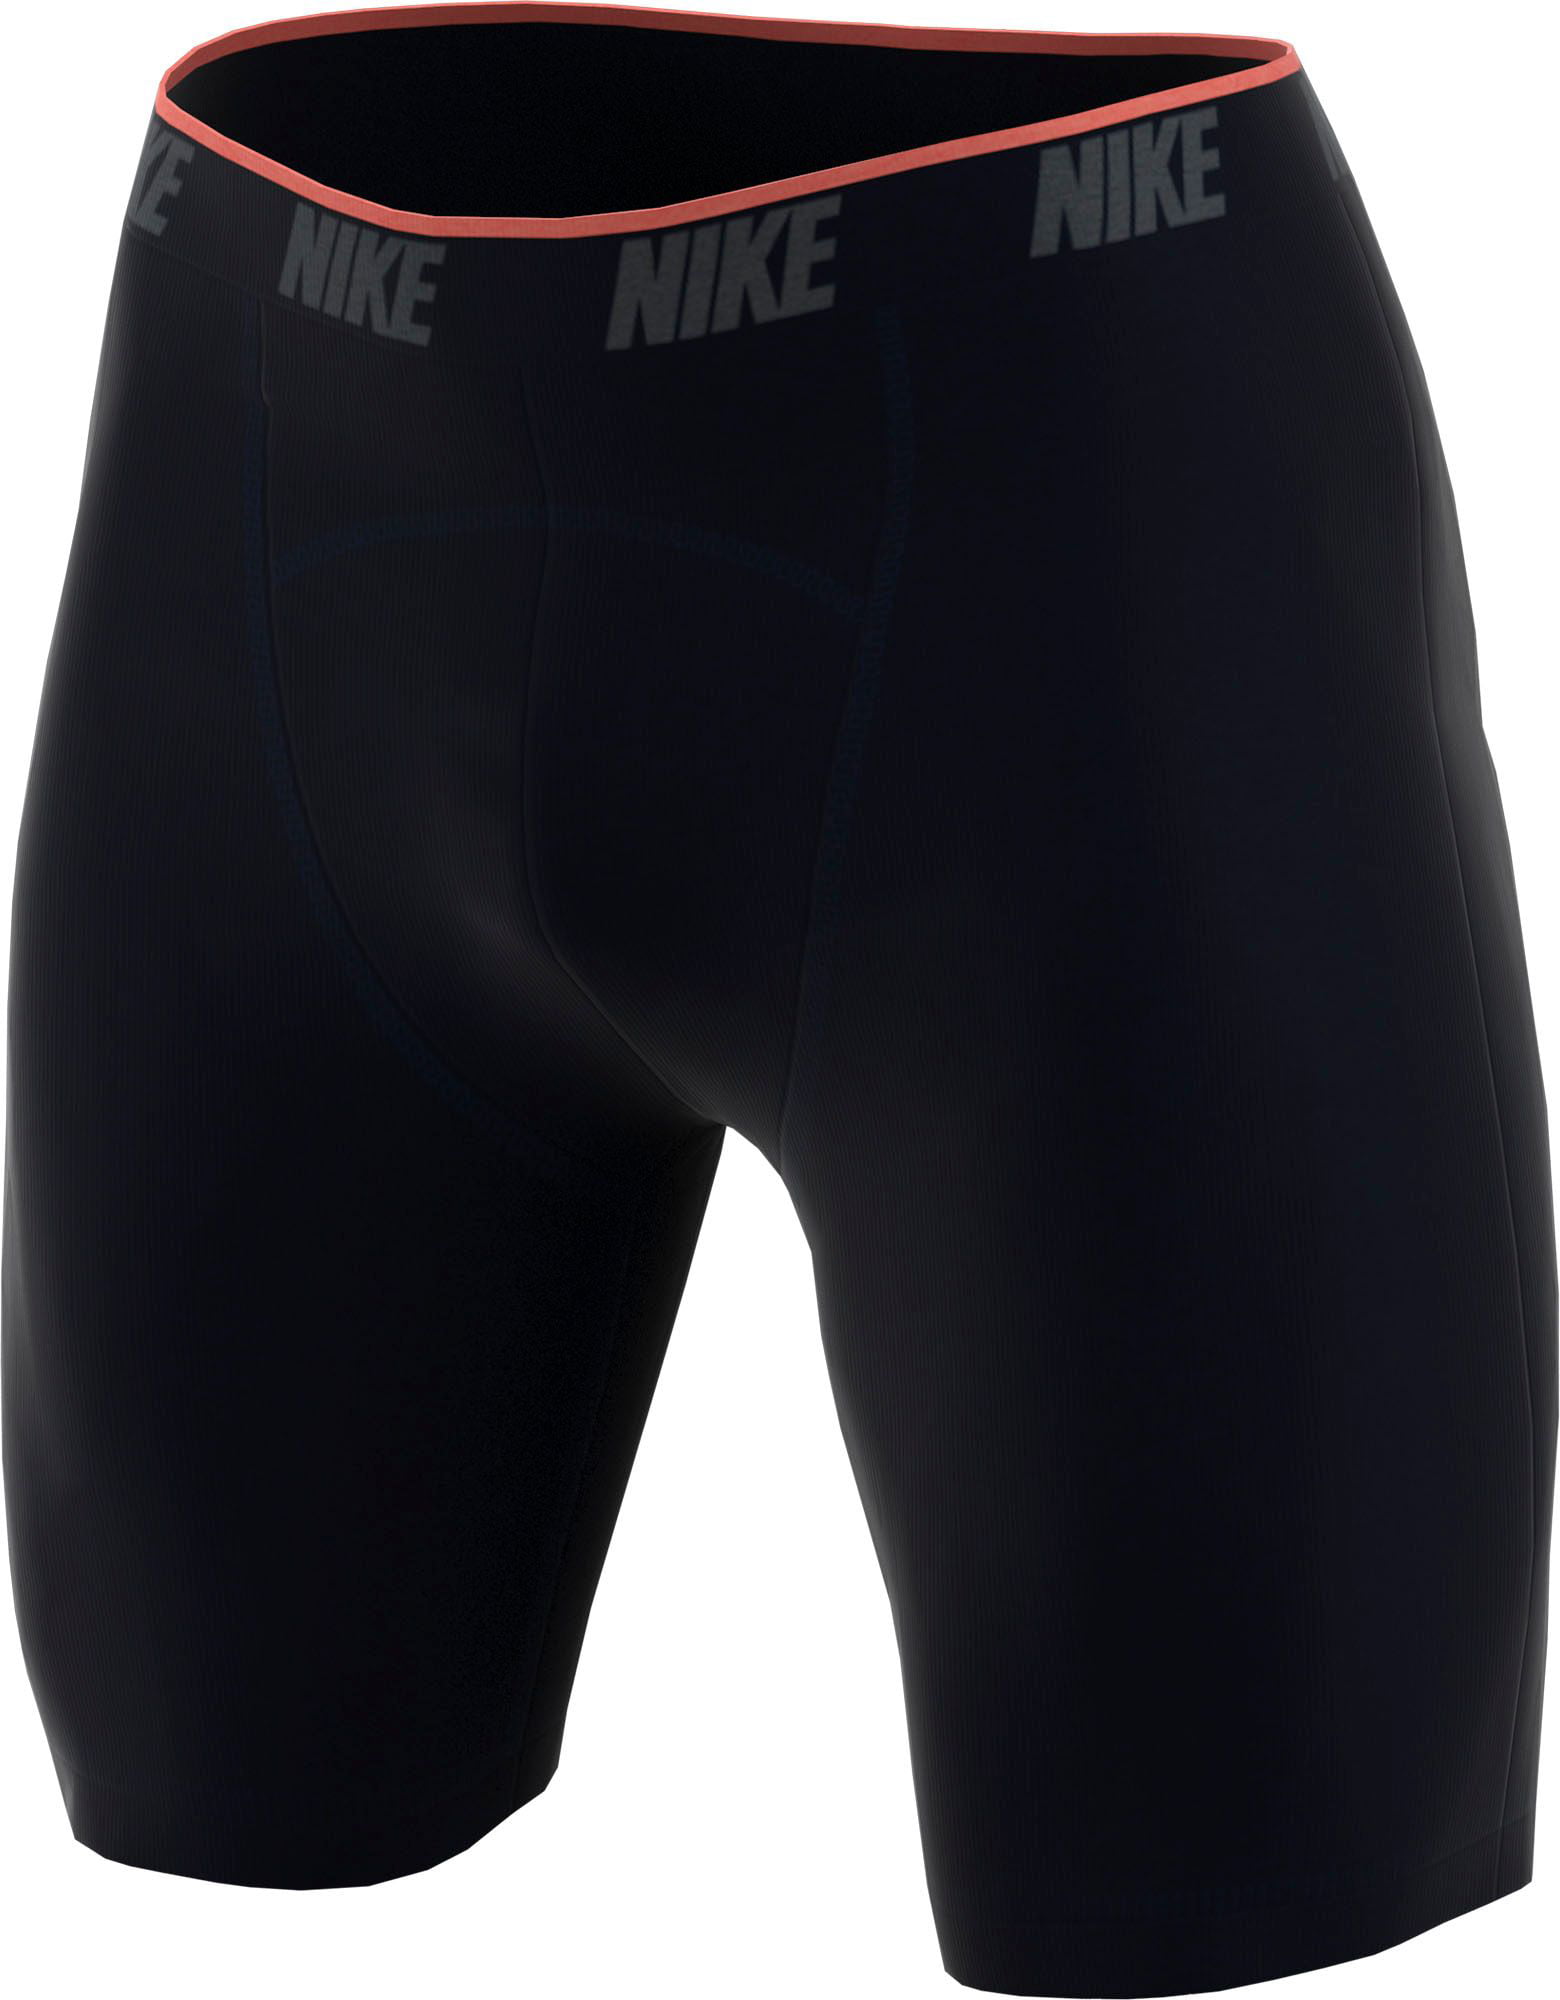 Nike Men's Long Boxer Briefs ? 2 Pack 